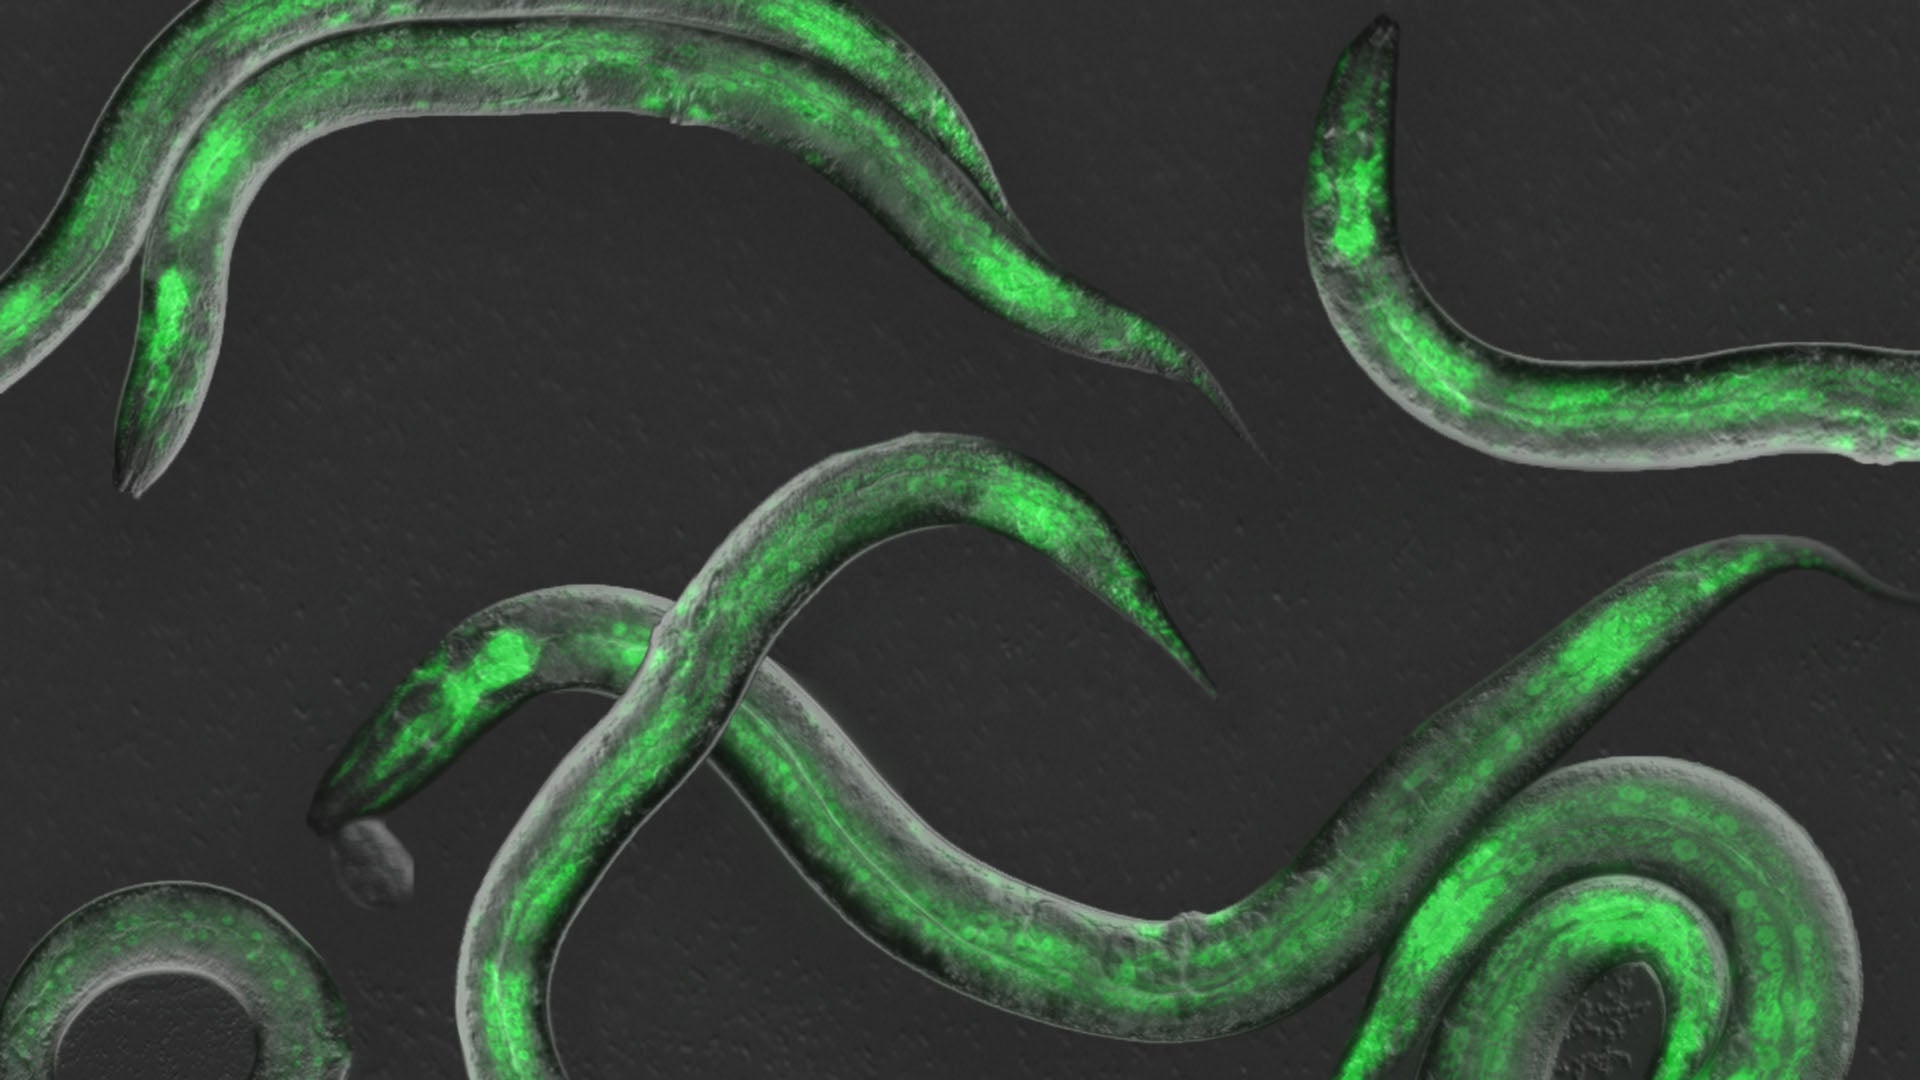 Image of C. elegans worms